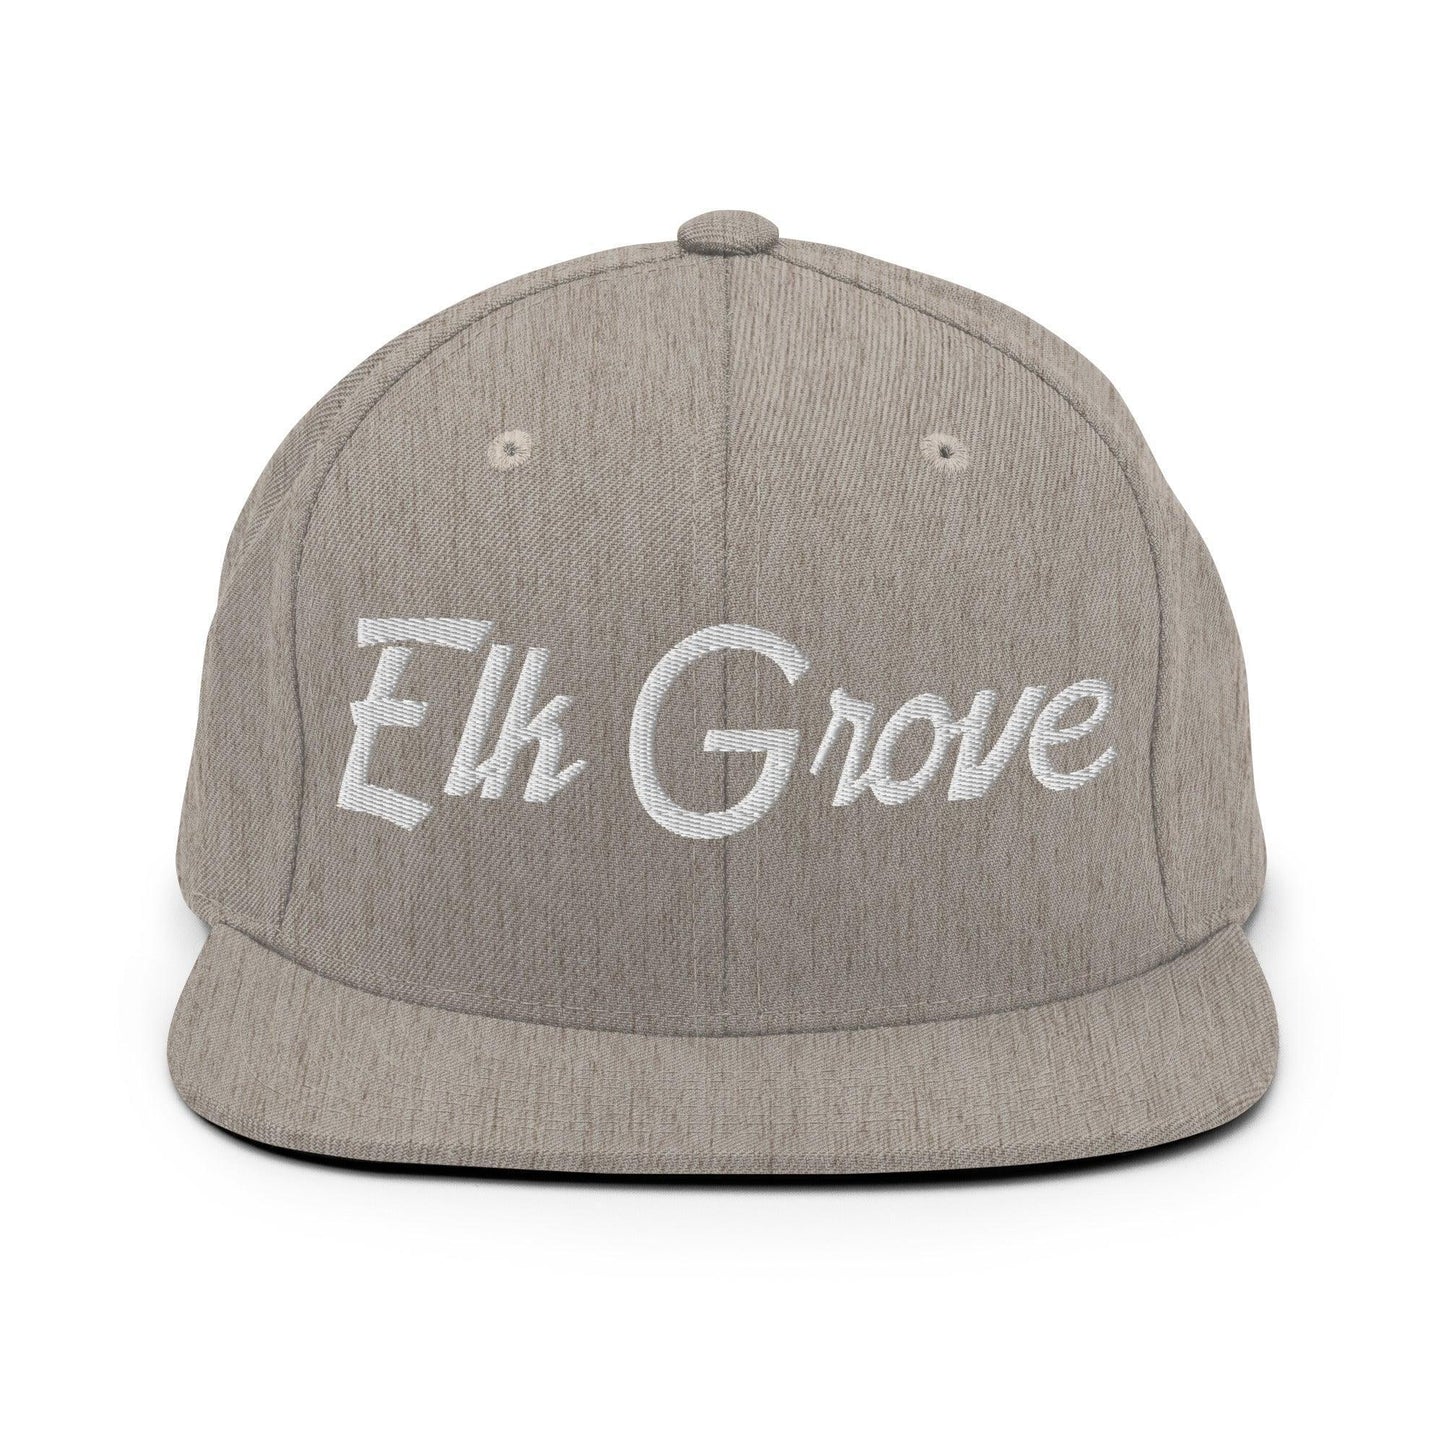 Elk Grove Script Snapback Hat Heather Grey